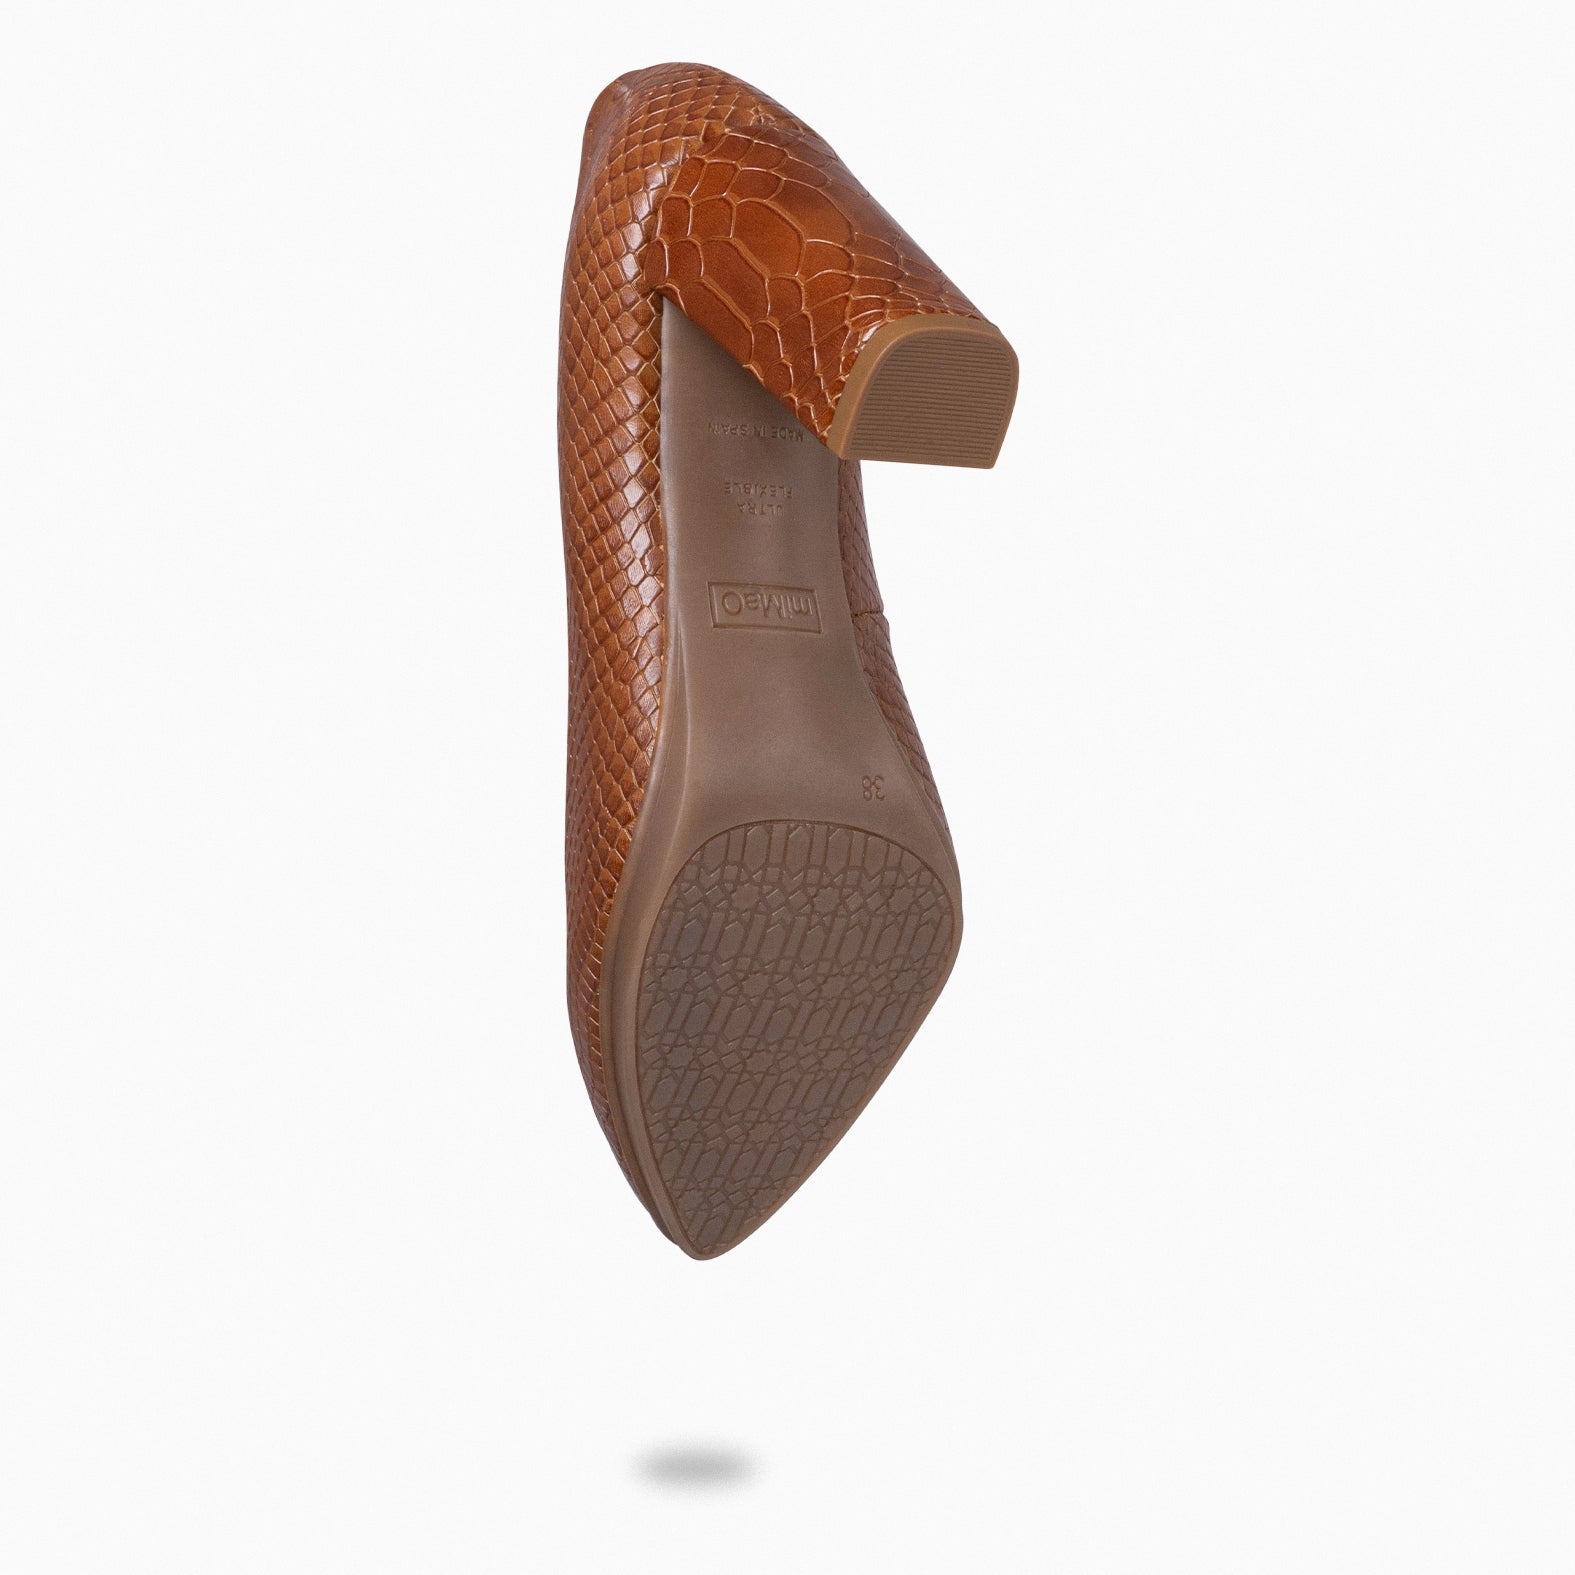 URBAN SAUVAGE – BROWN snake textured high heels 